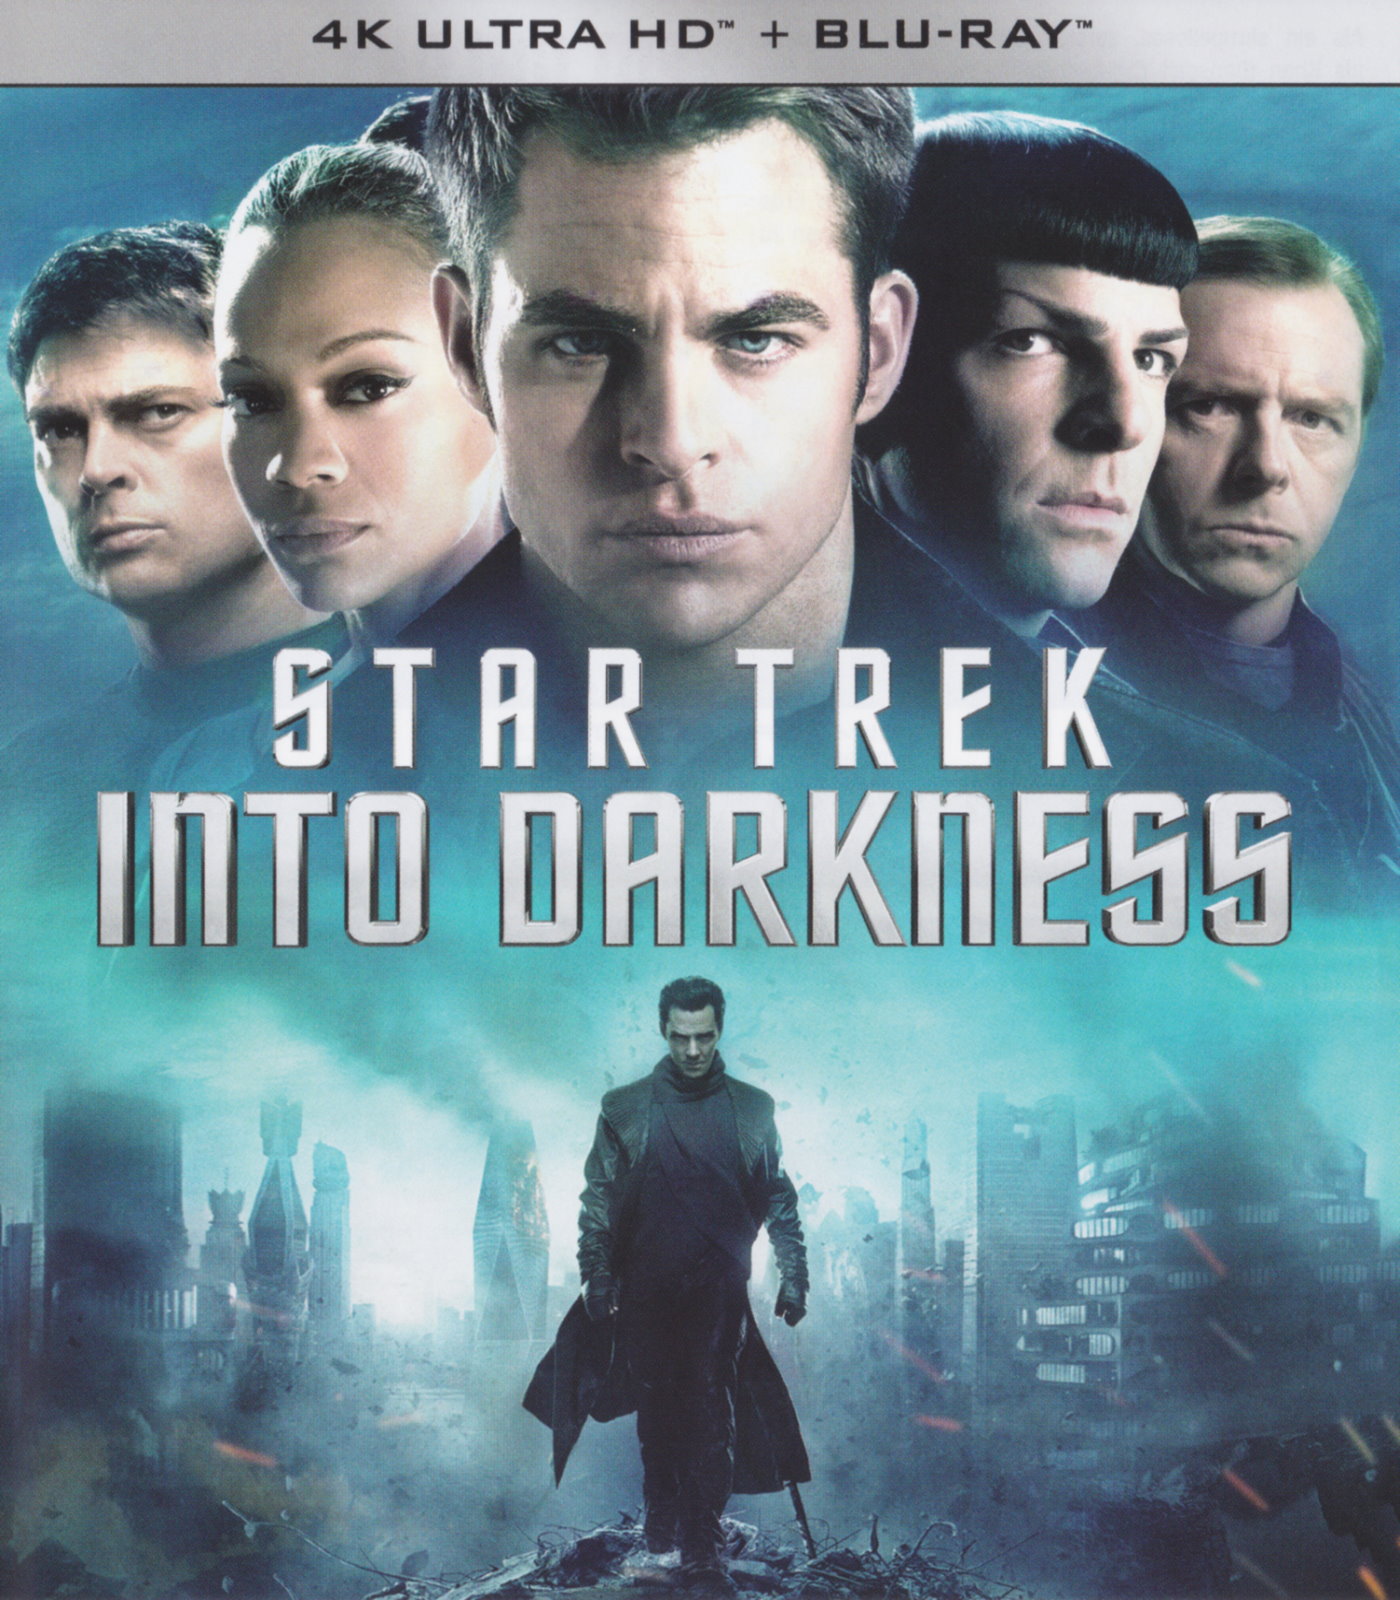 Cover - Star Trek - Into Darkness.jpg